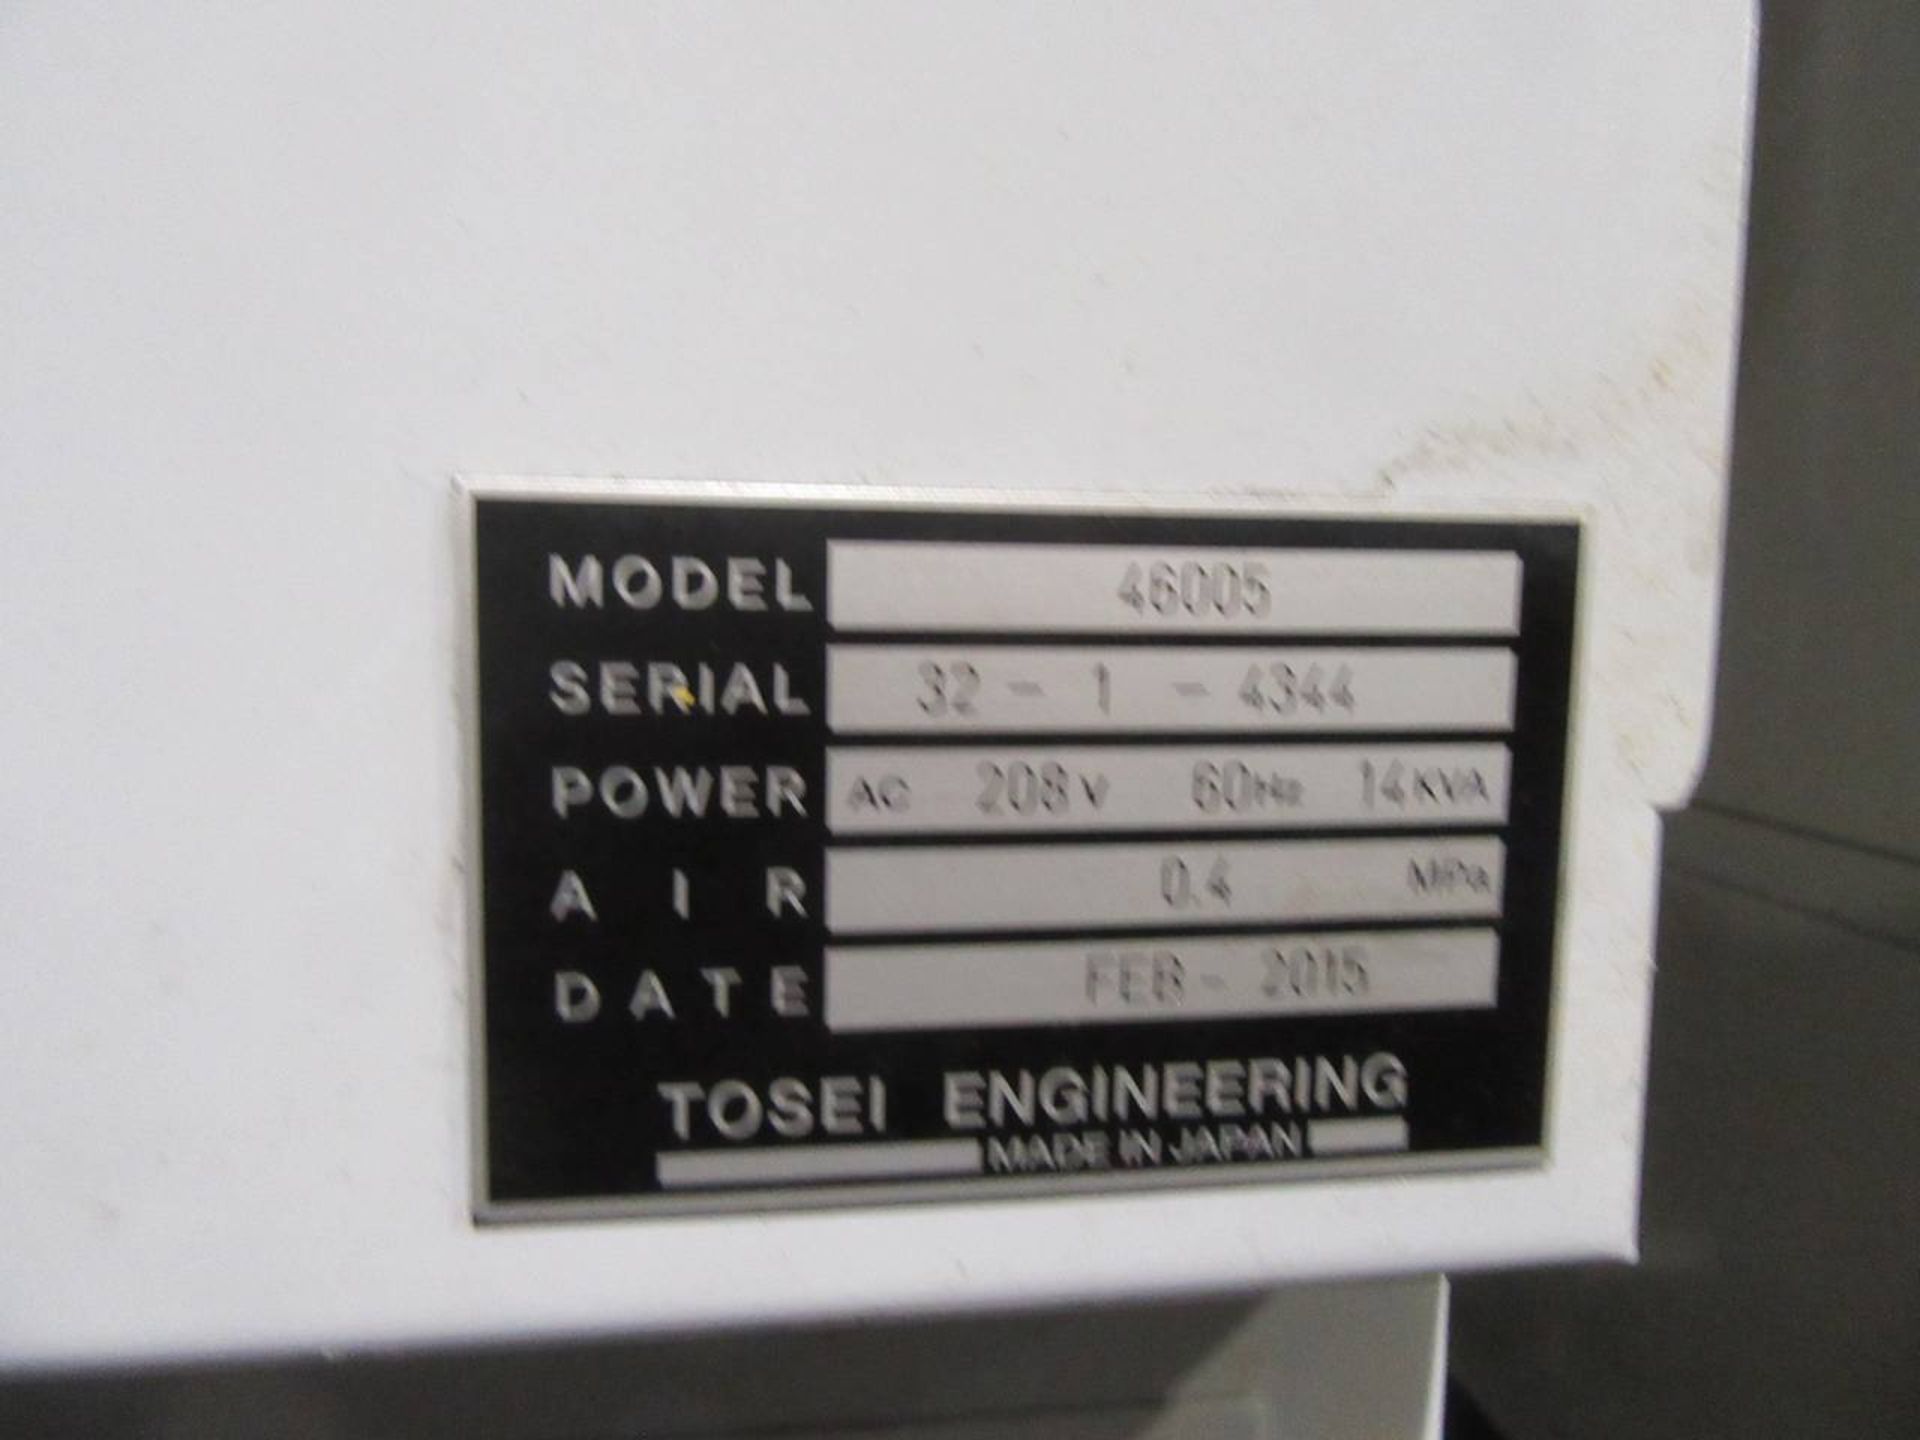 2015 Tosei Engineering 46005 Accretch Measuring Machine - Image 5 of 5